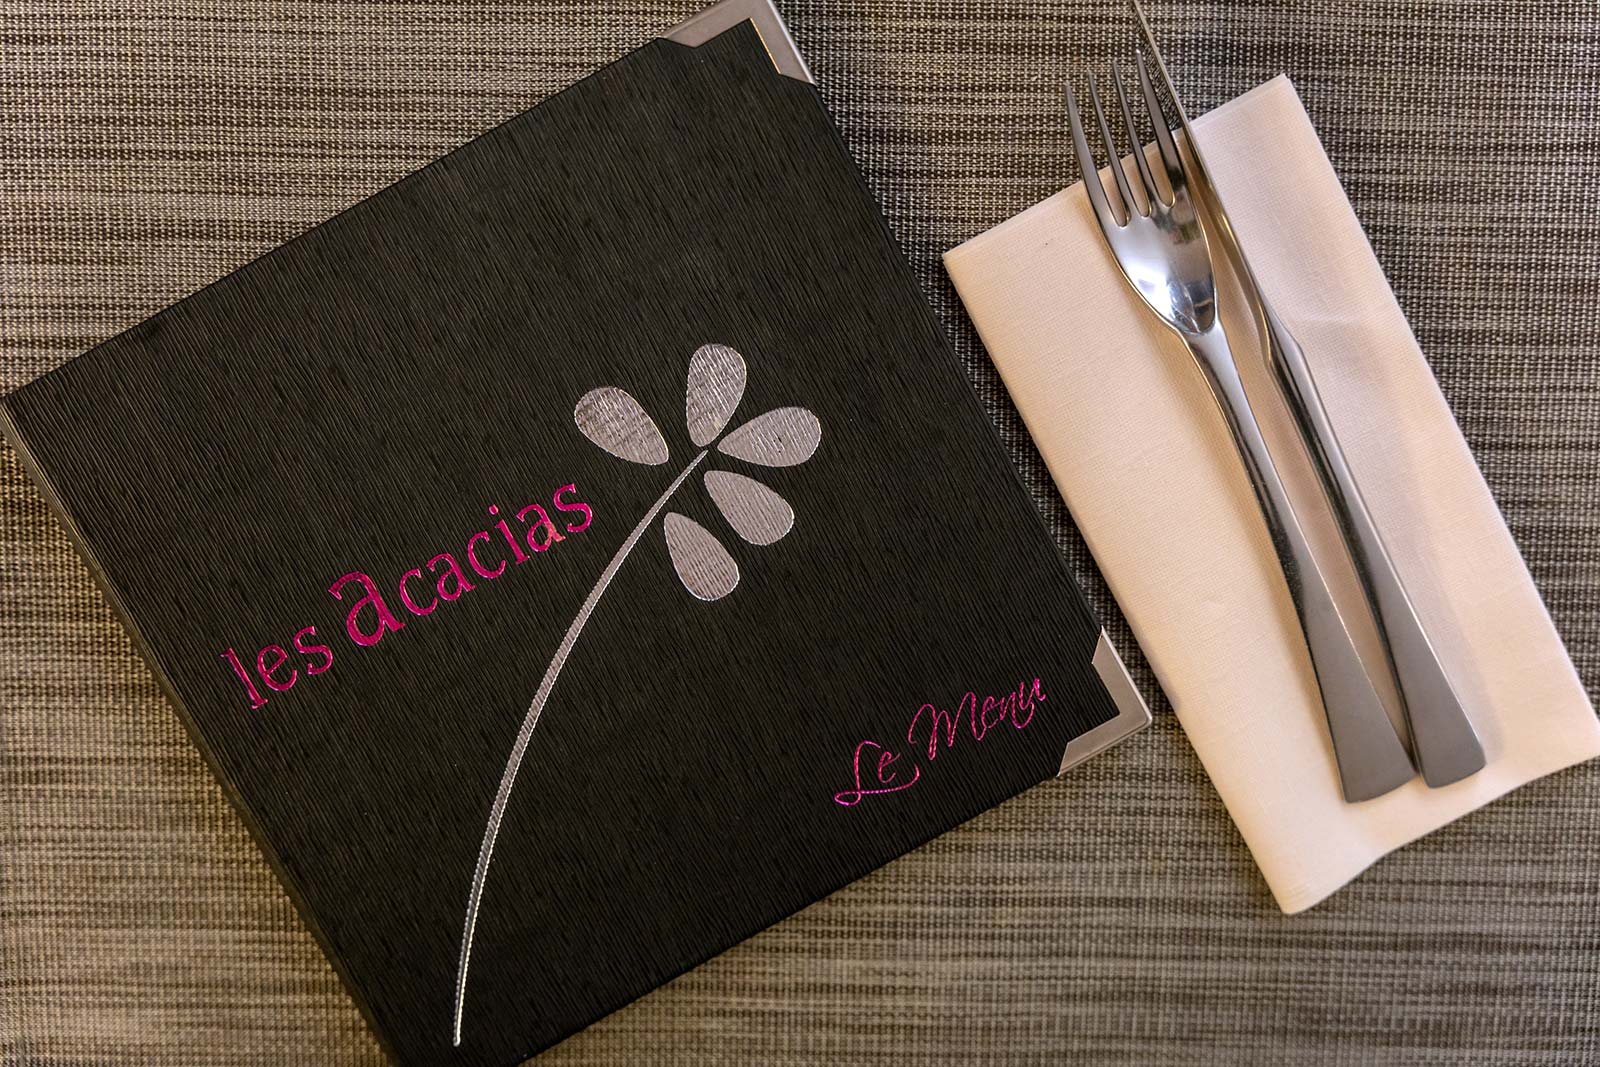 Menu, napkin and cutlery on a table in a gastronomic restaurant near Saintes